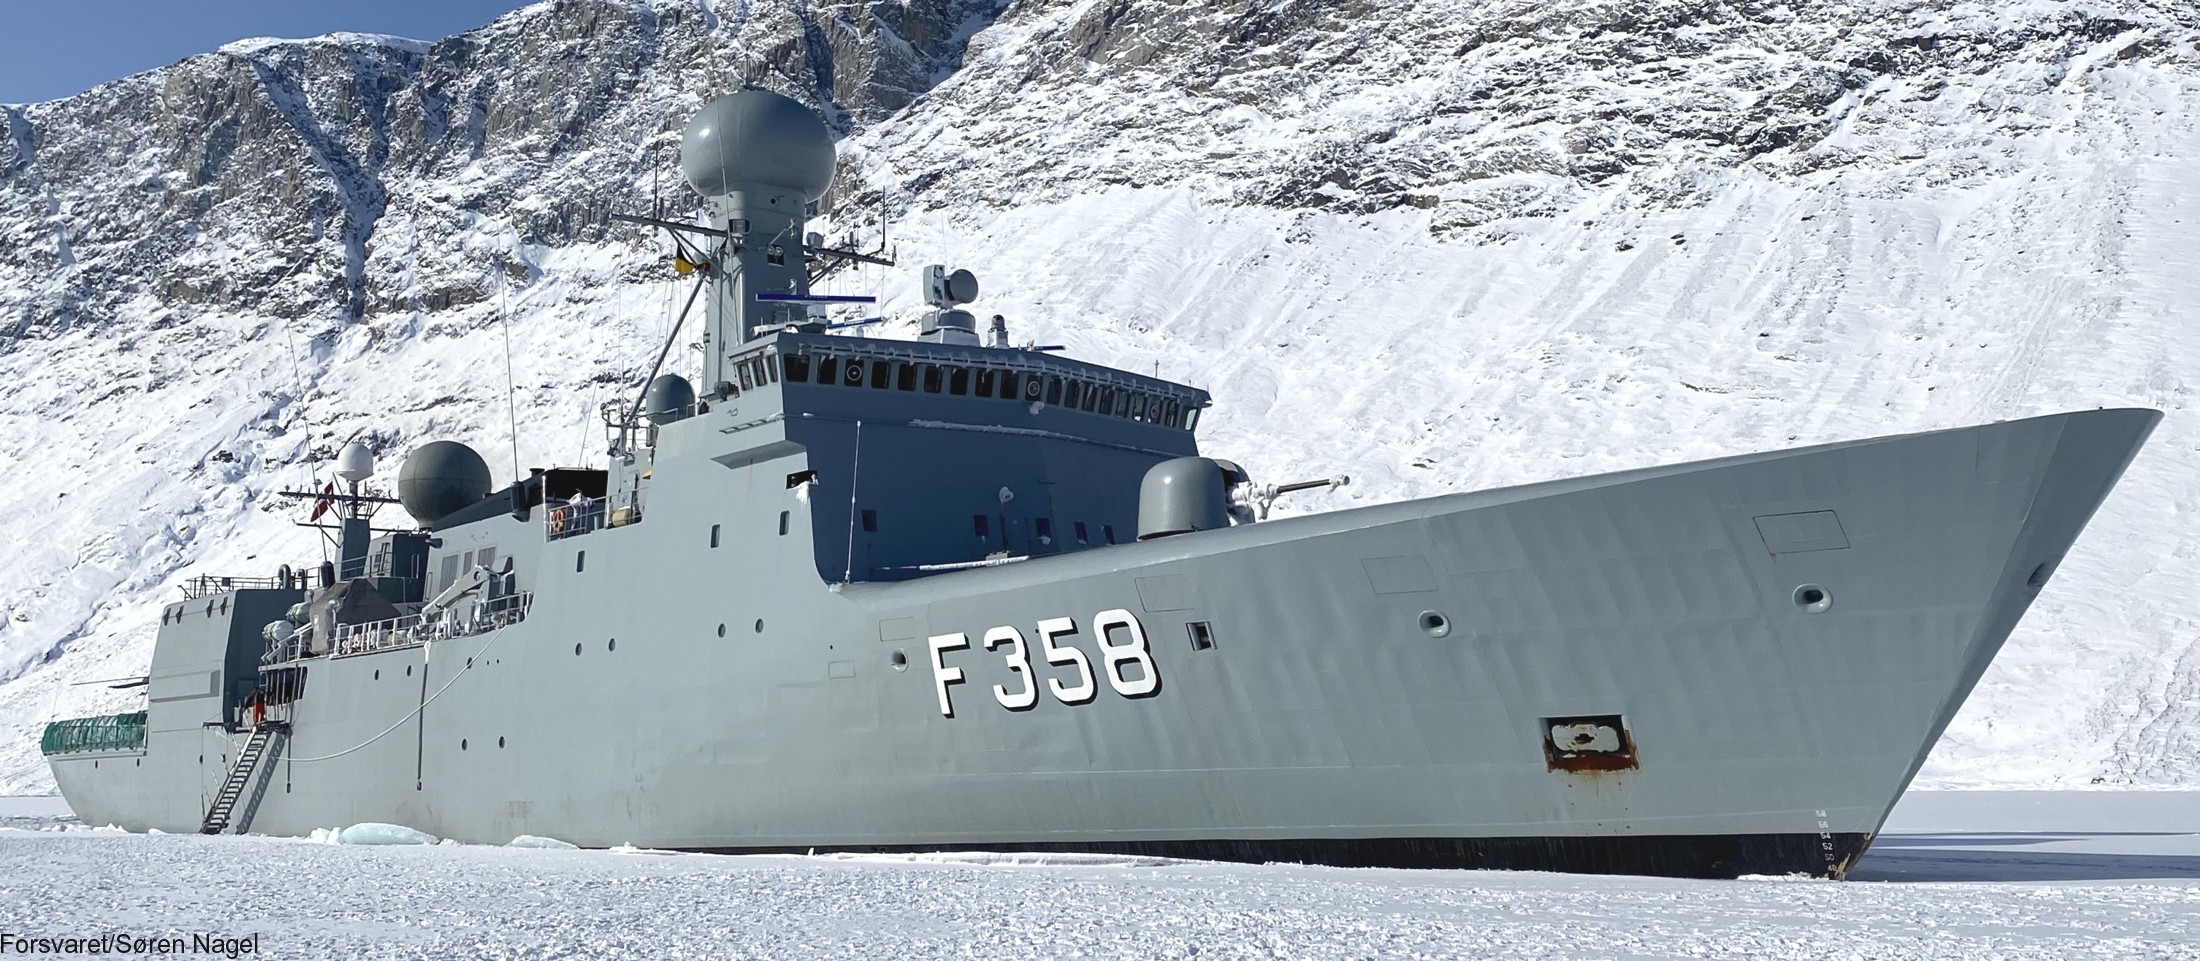 f-358 hdms triton thetis class ocean patrol frigate royal danish navy kongelige danske marine kdm inspektionsskibet 06 arctic ice